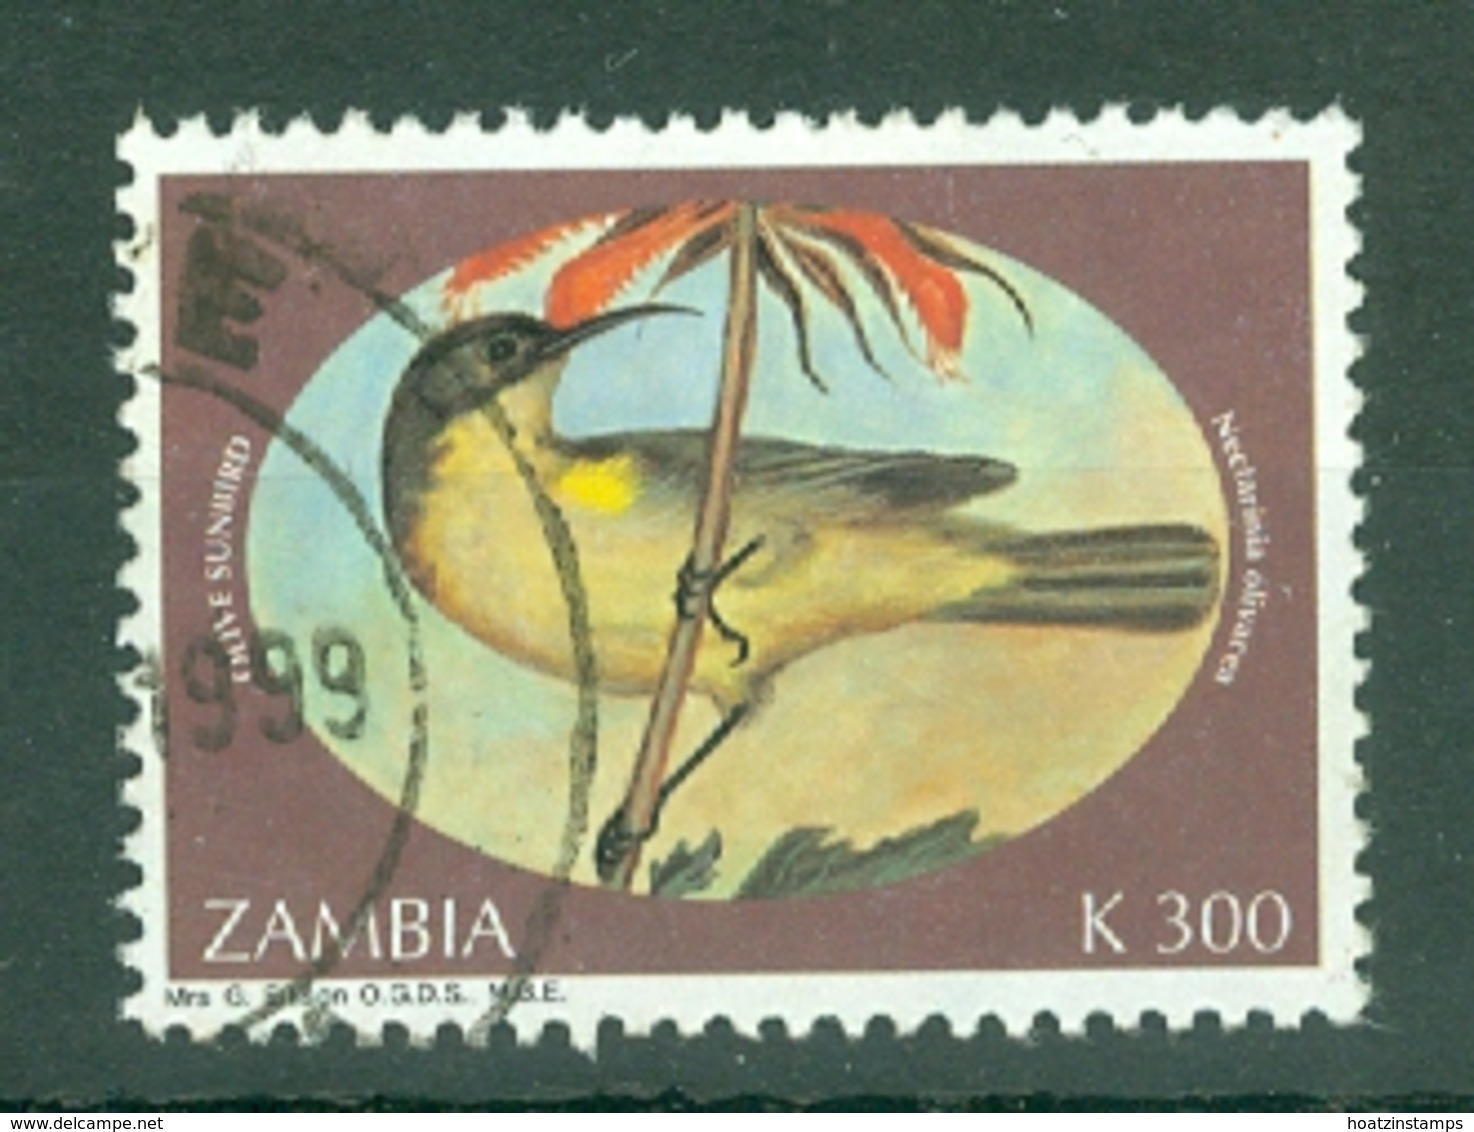 Zambia: 1994   Sunbirds    SG729   K300     Used - Zambia (1965-...)